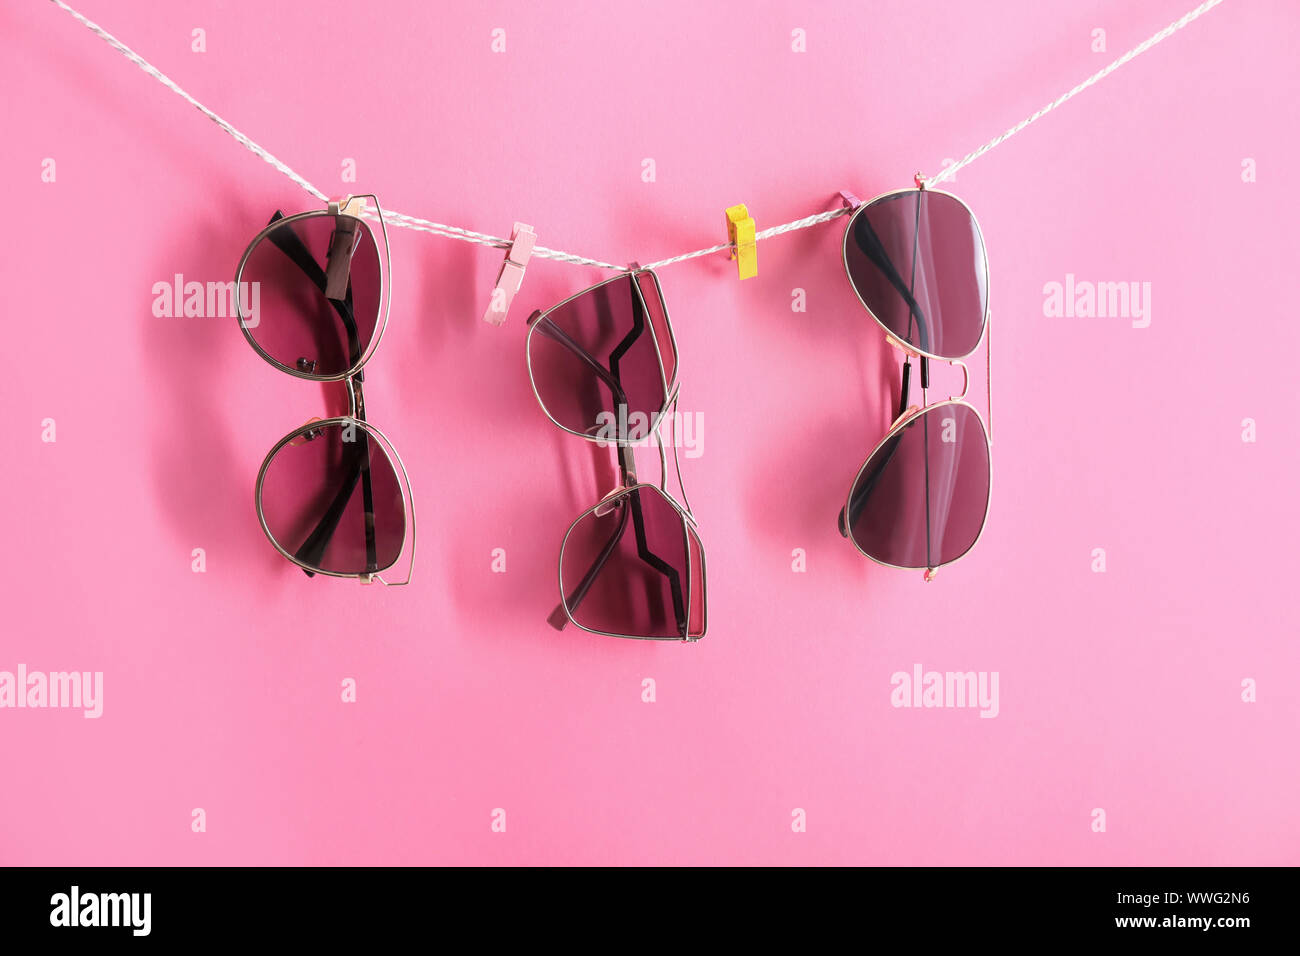 Stylish sunglasses hanging on rope against color background Stock Photo